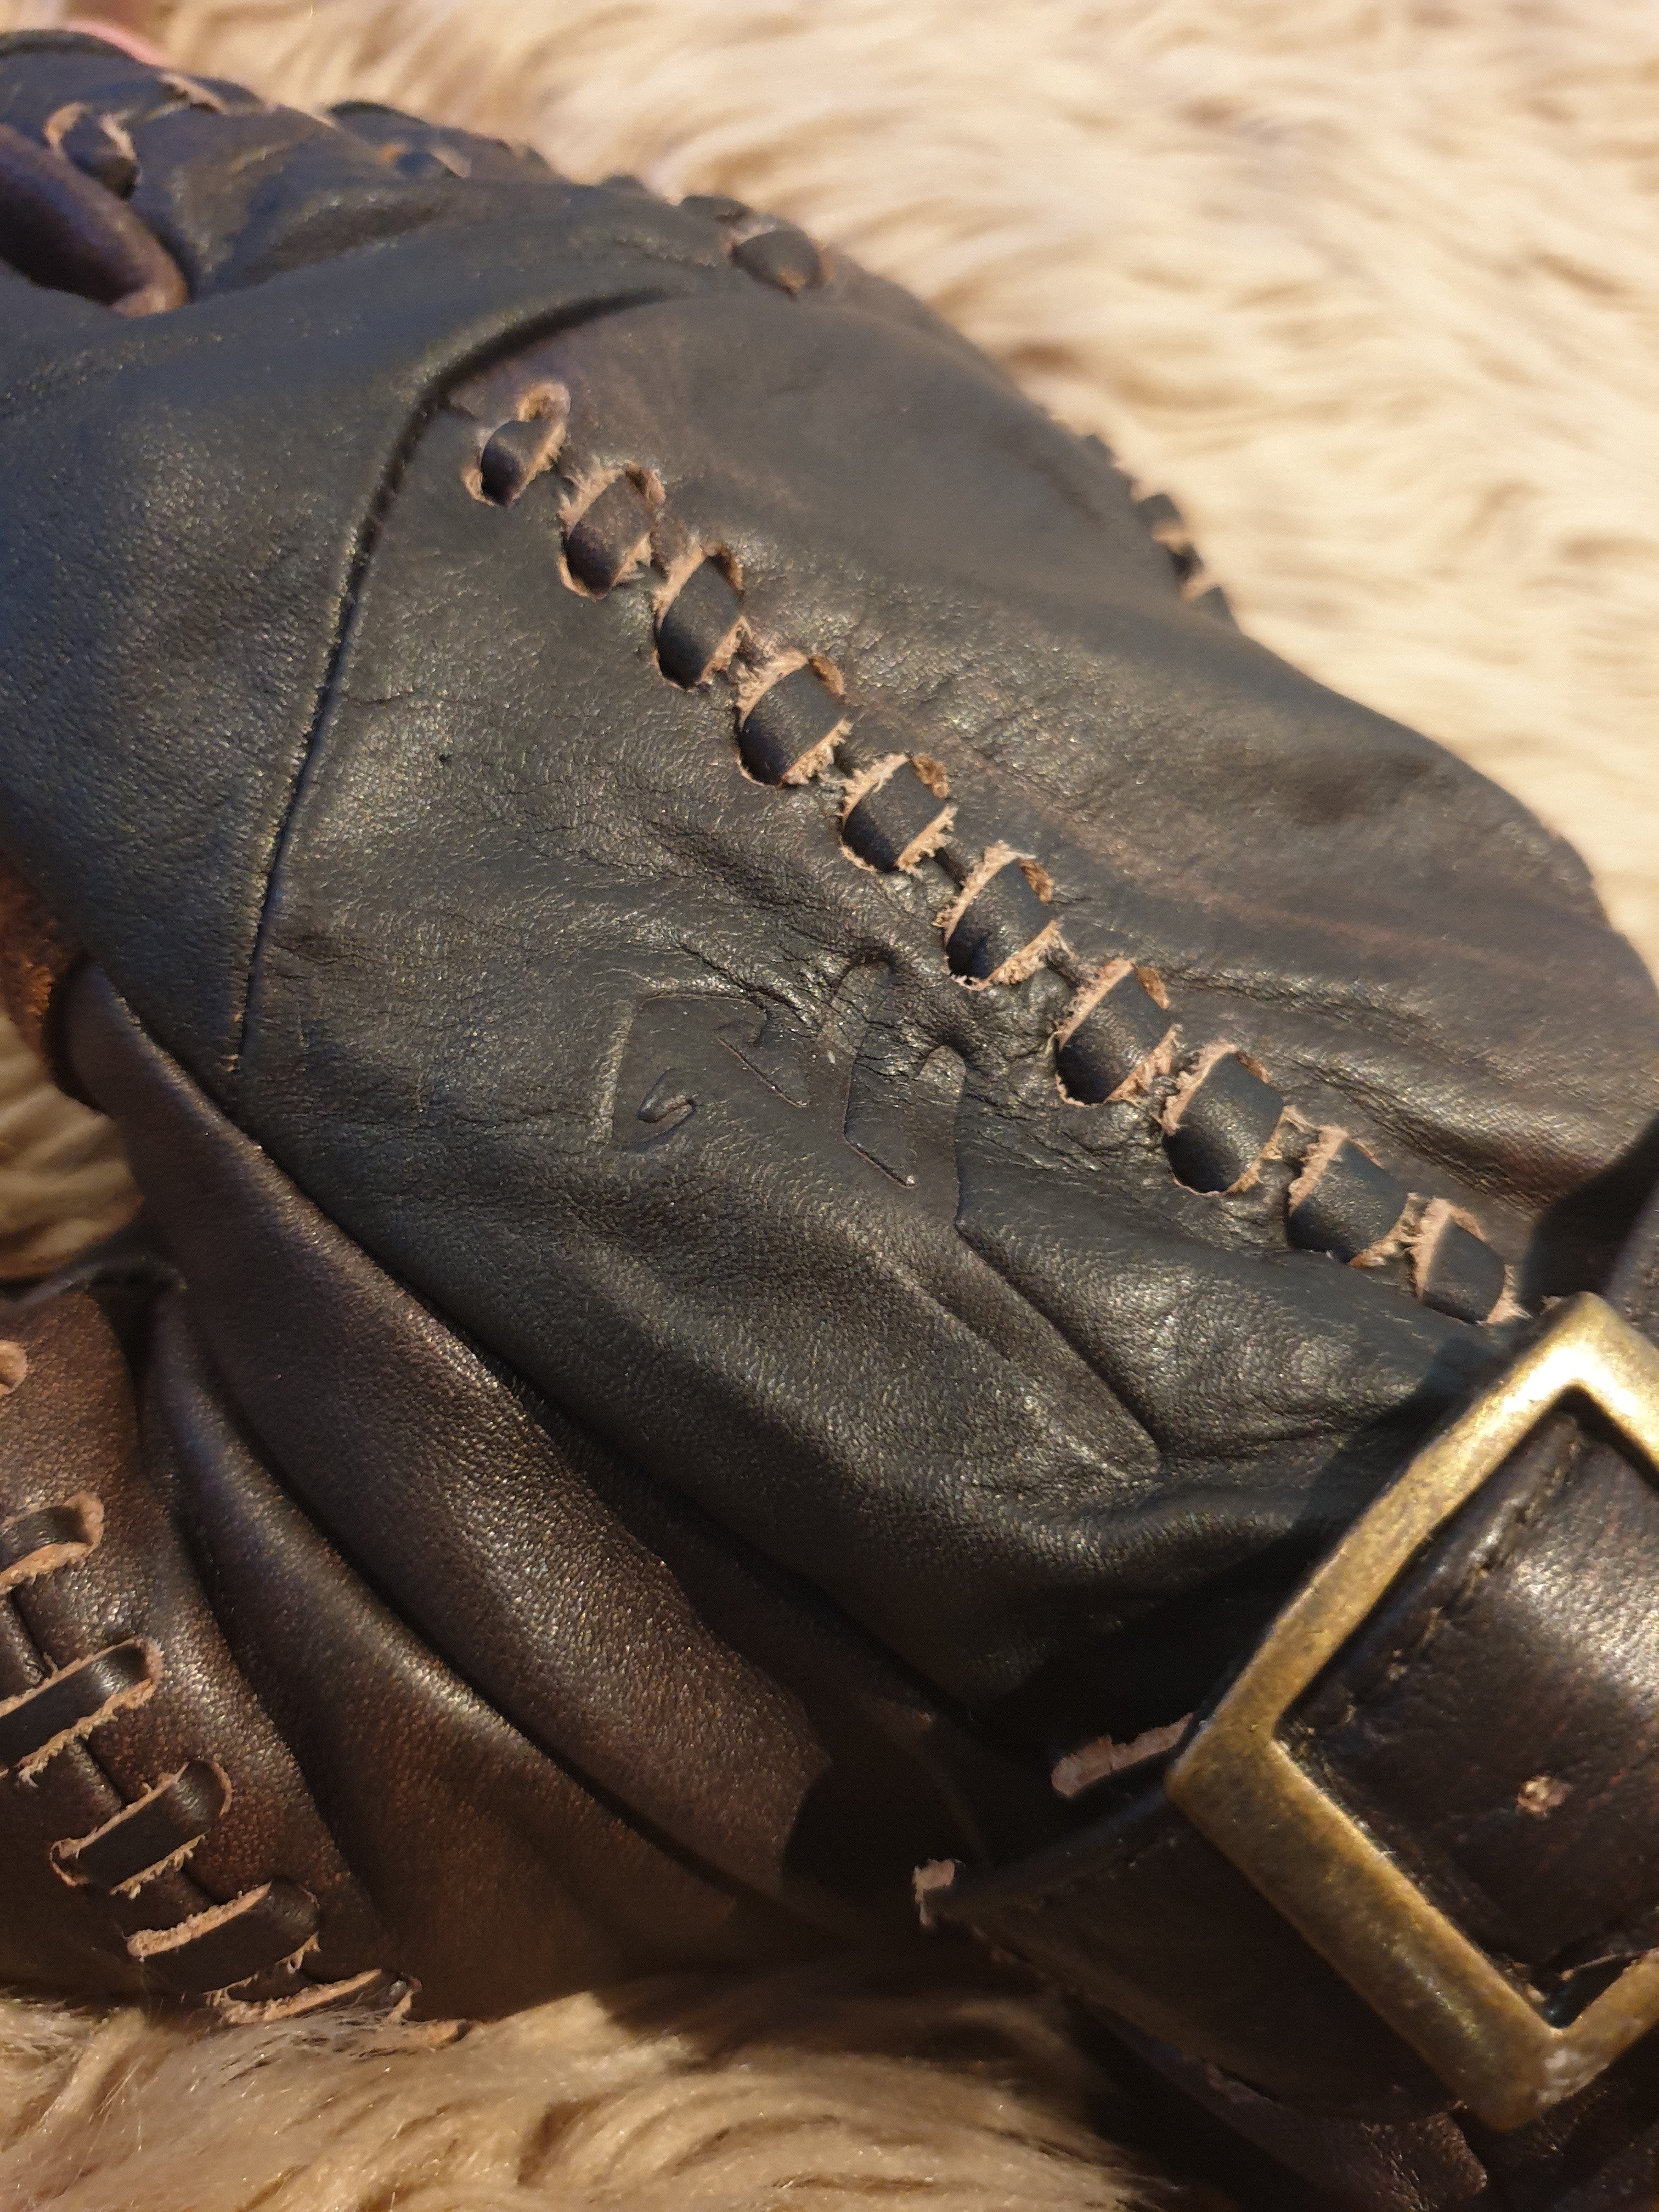 TOR fingerless leather glove BROWN